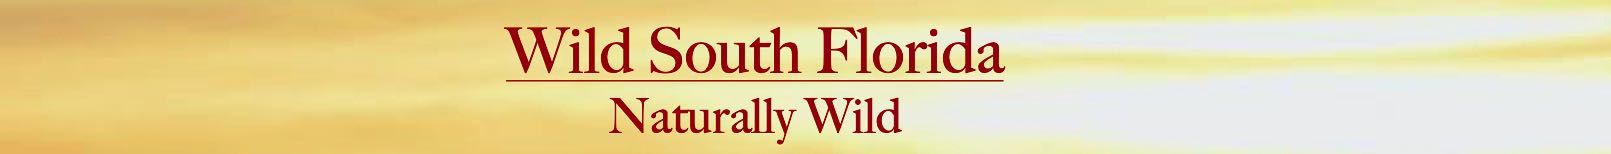 wild south florida banner